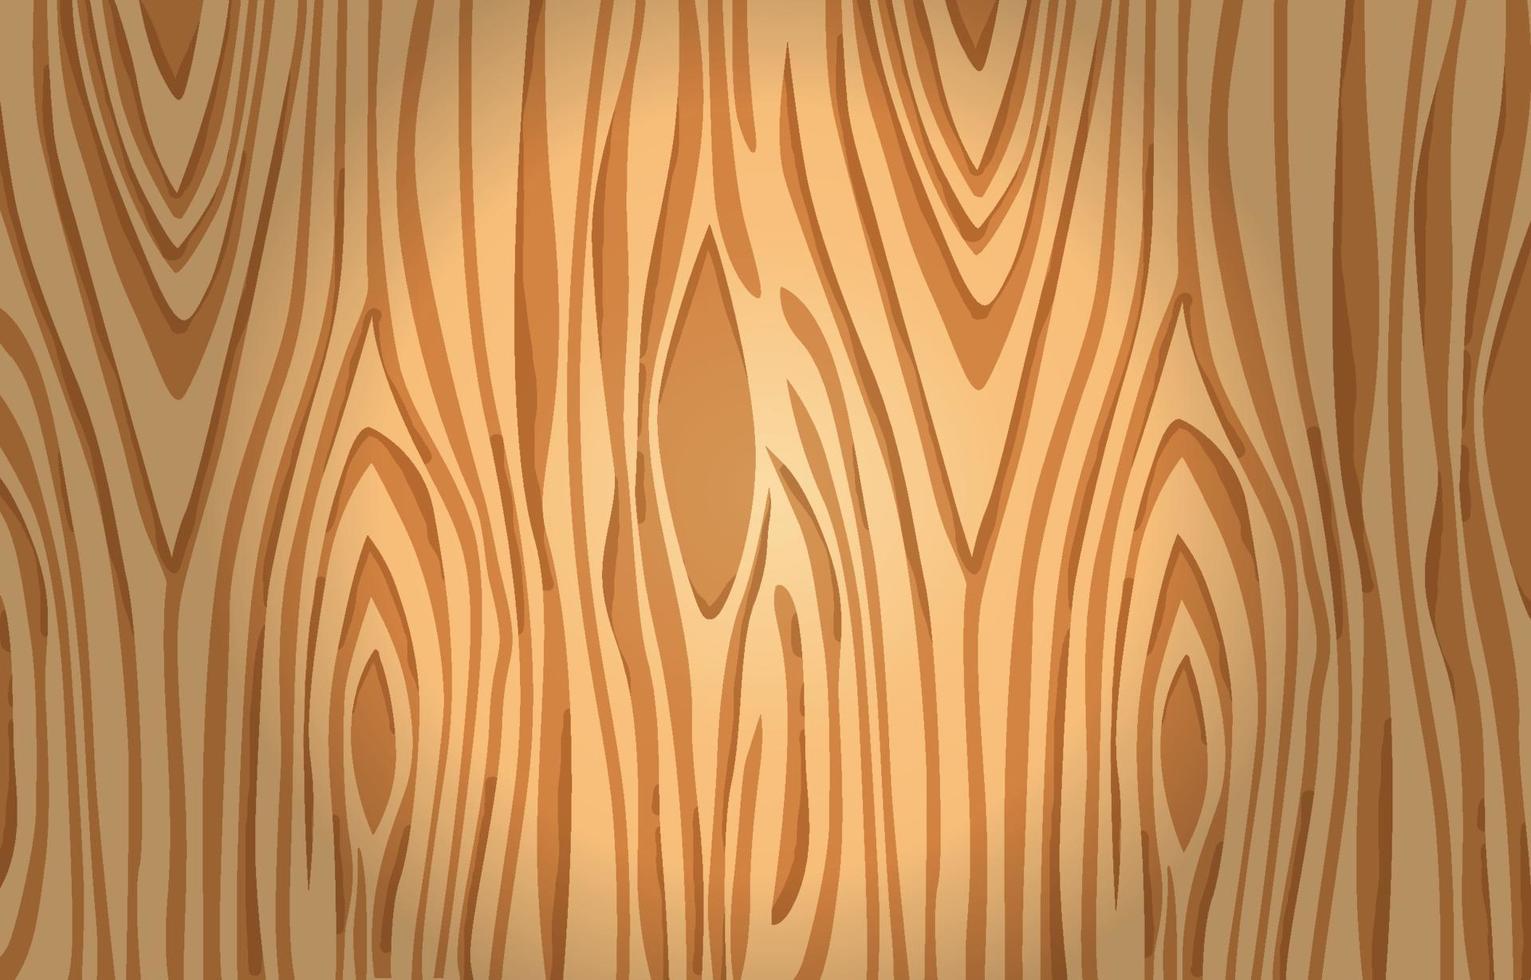 Pine Wood Texture Background vector